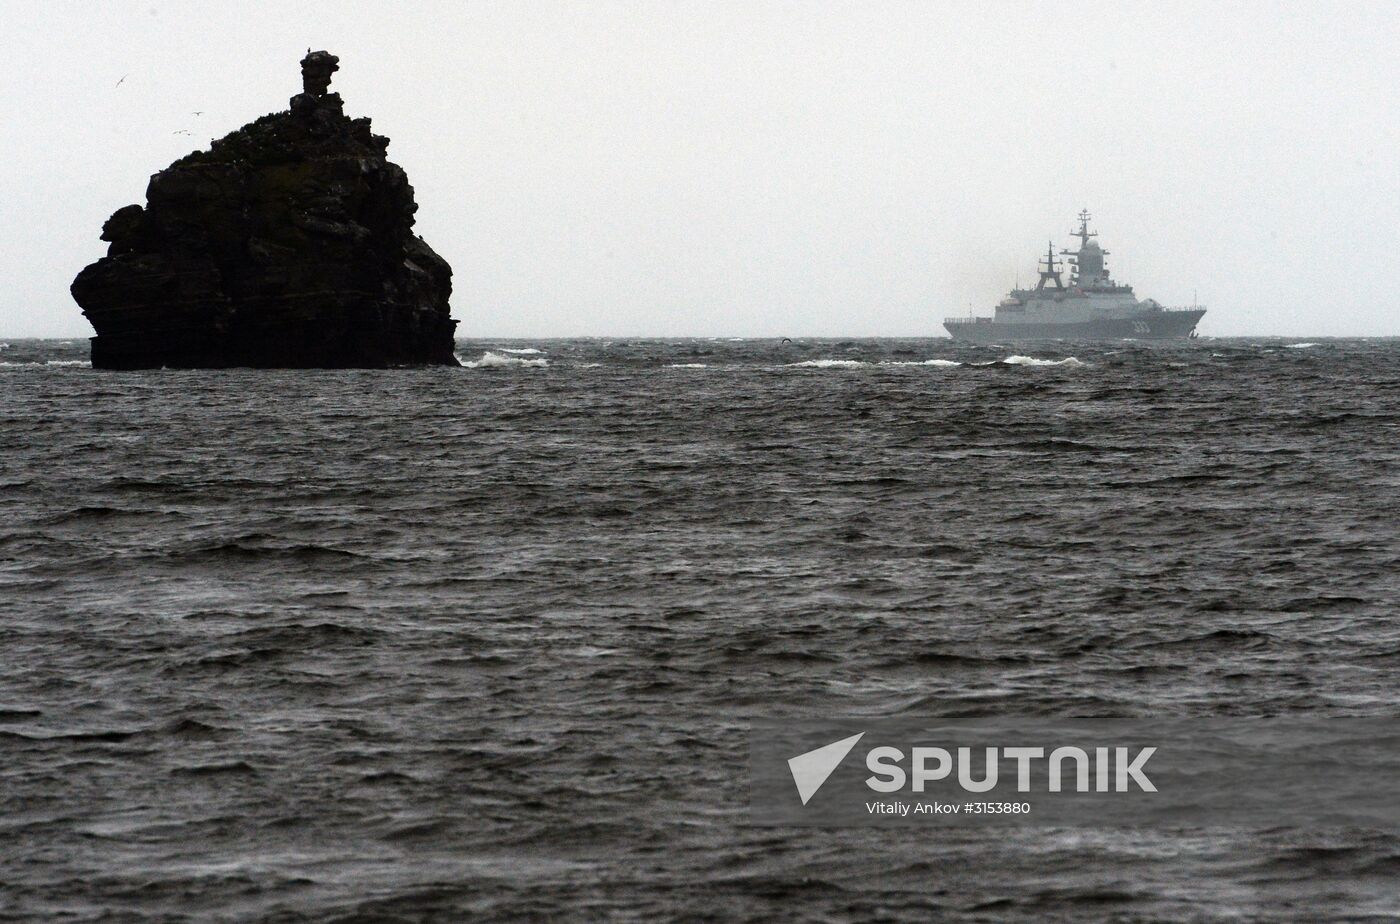 Sovershenny corvette joins Russia's Pacific Fleet